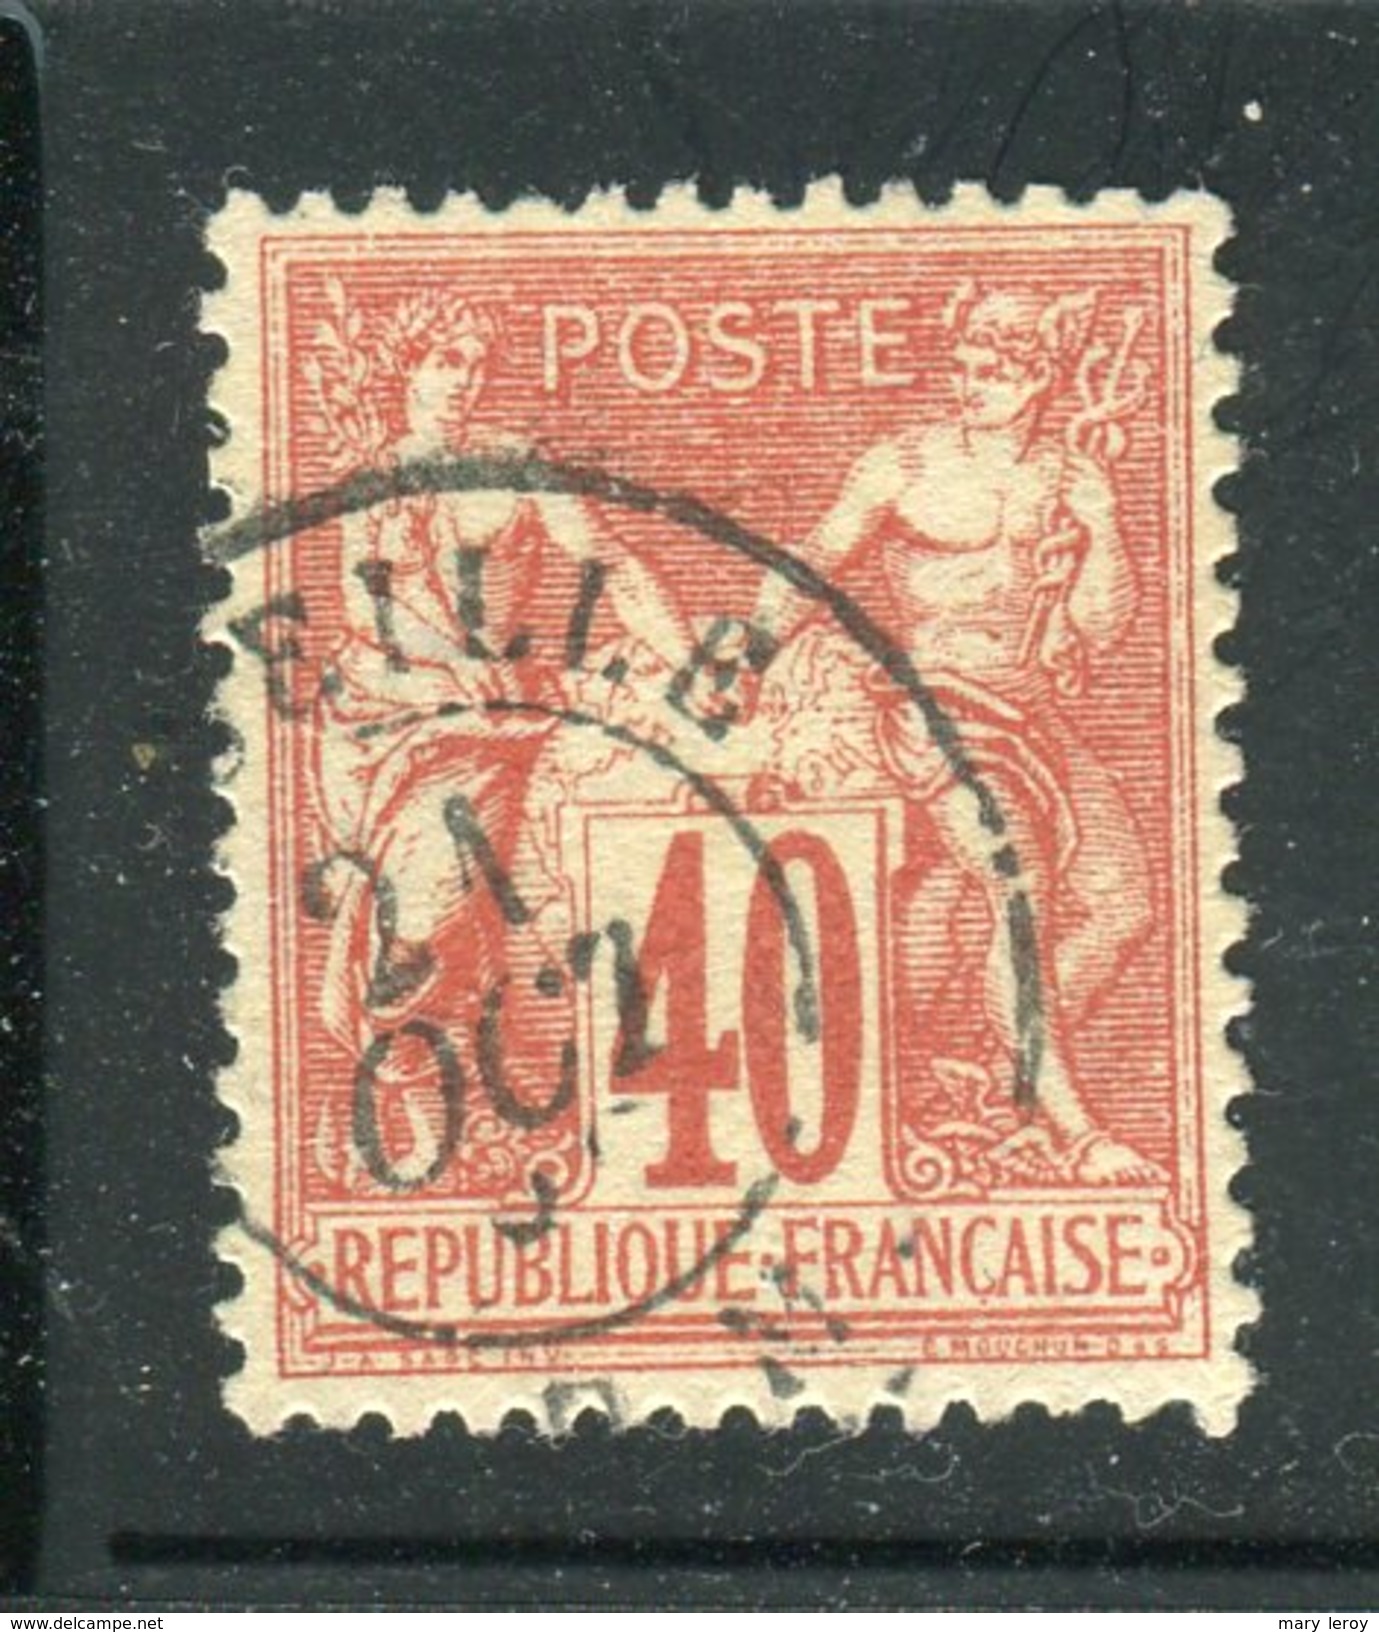 Superbe N° 70 Centrage Parfait - Cachet Marseille B.M. - 1876-1878 Sage (Type I)